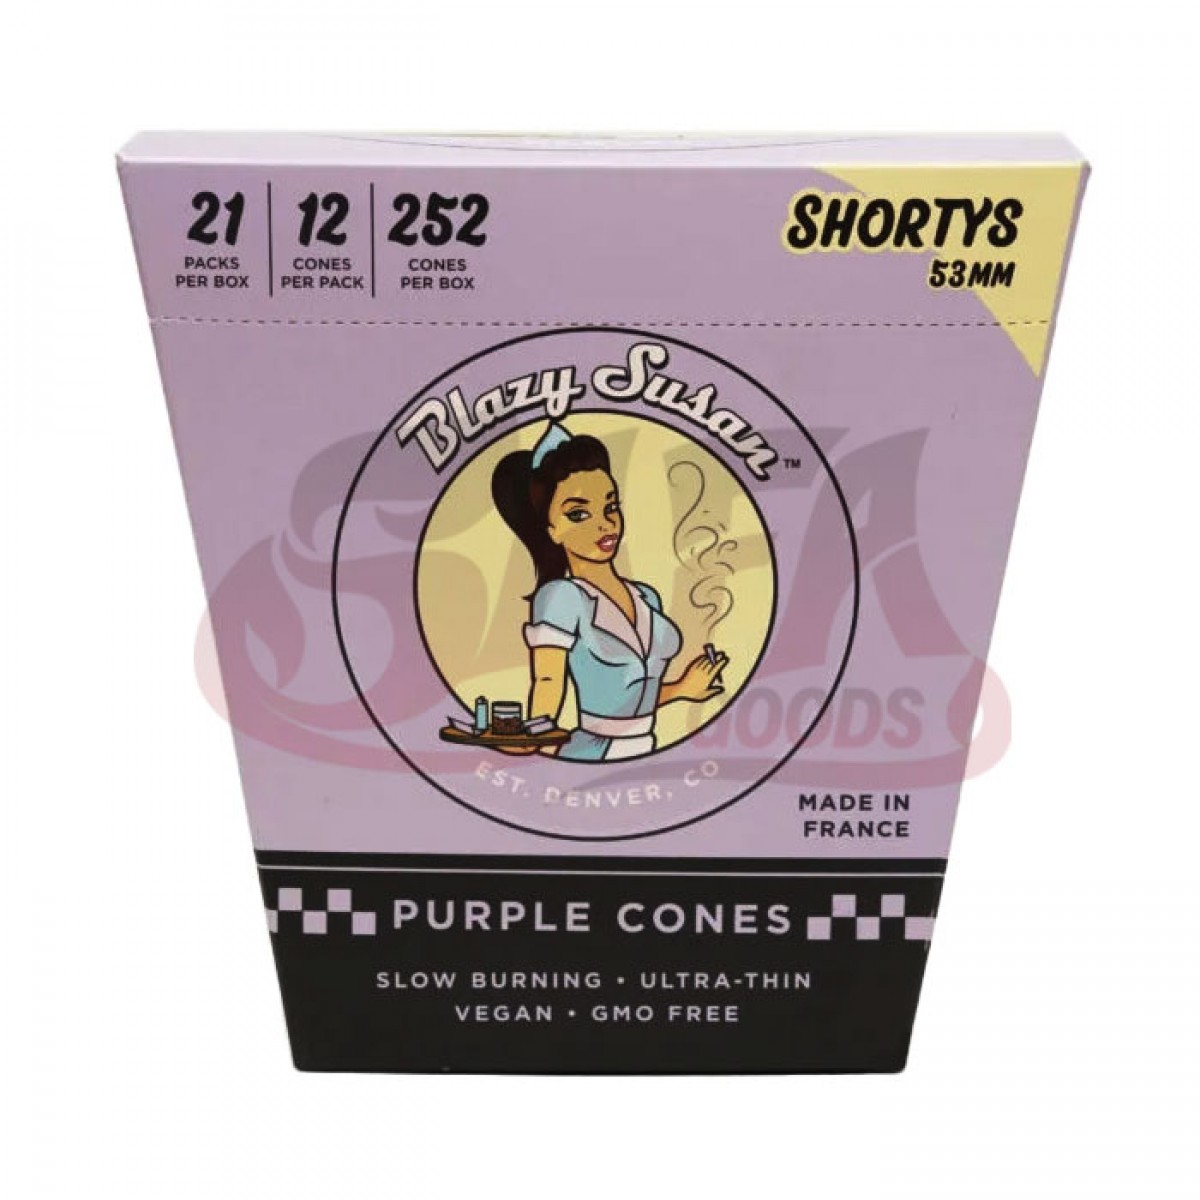 Blazy Susan Purple Shorty Cones 53MM - 21PK Display Box